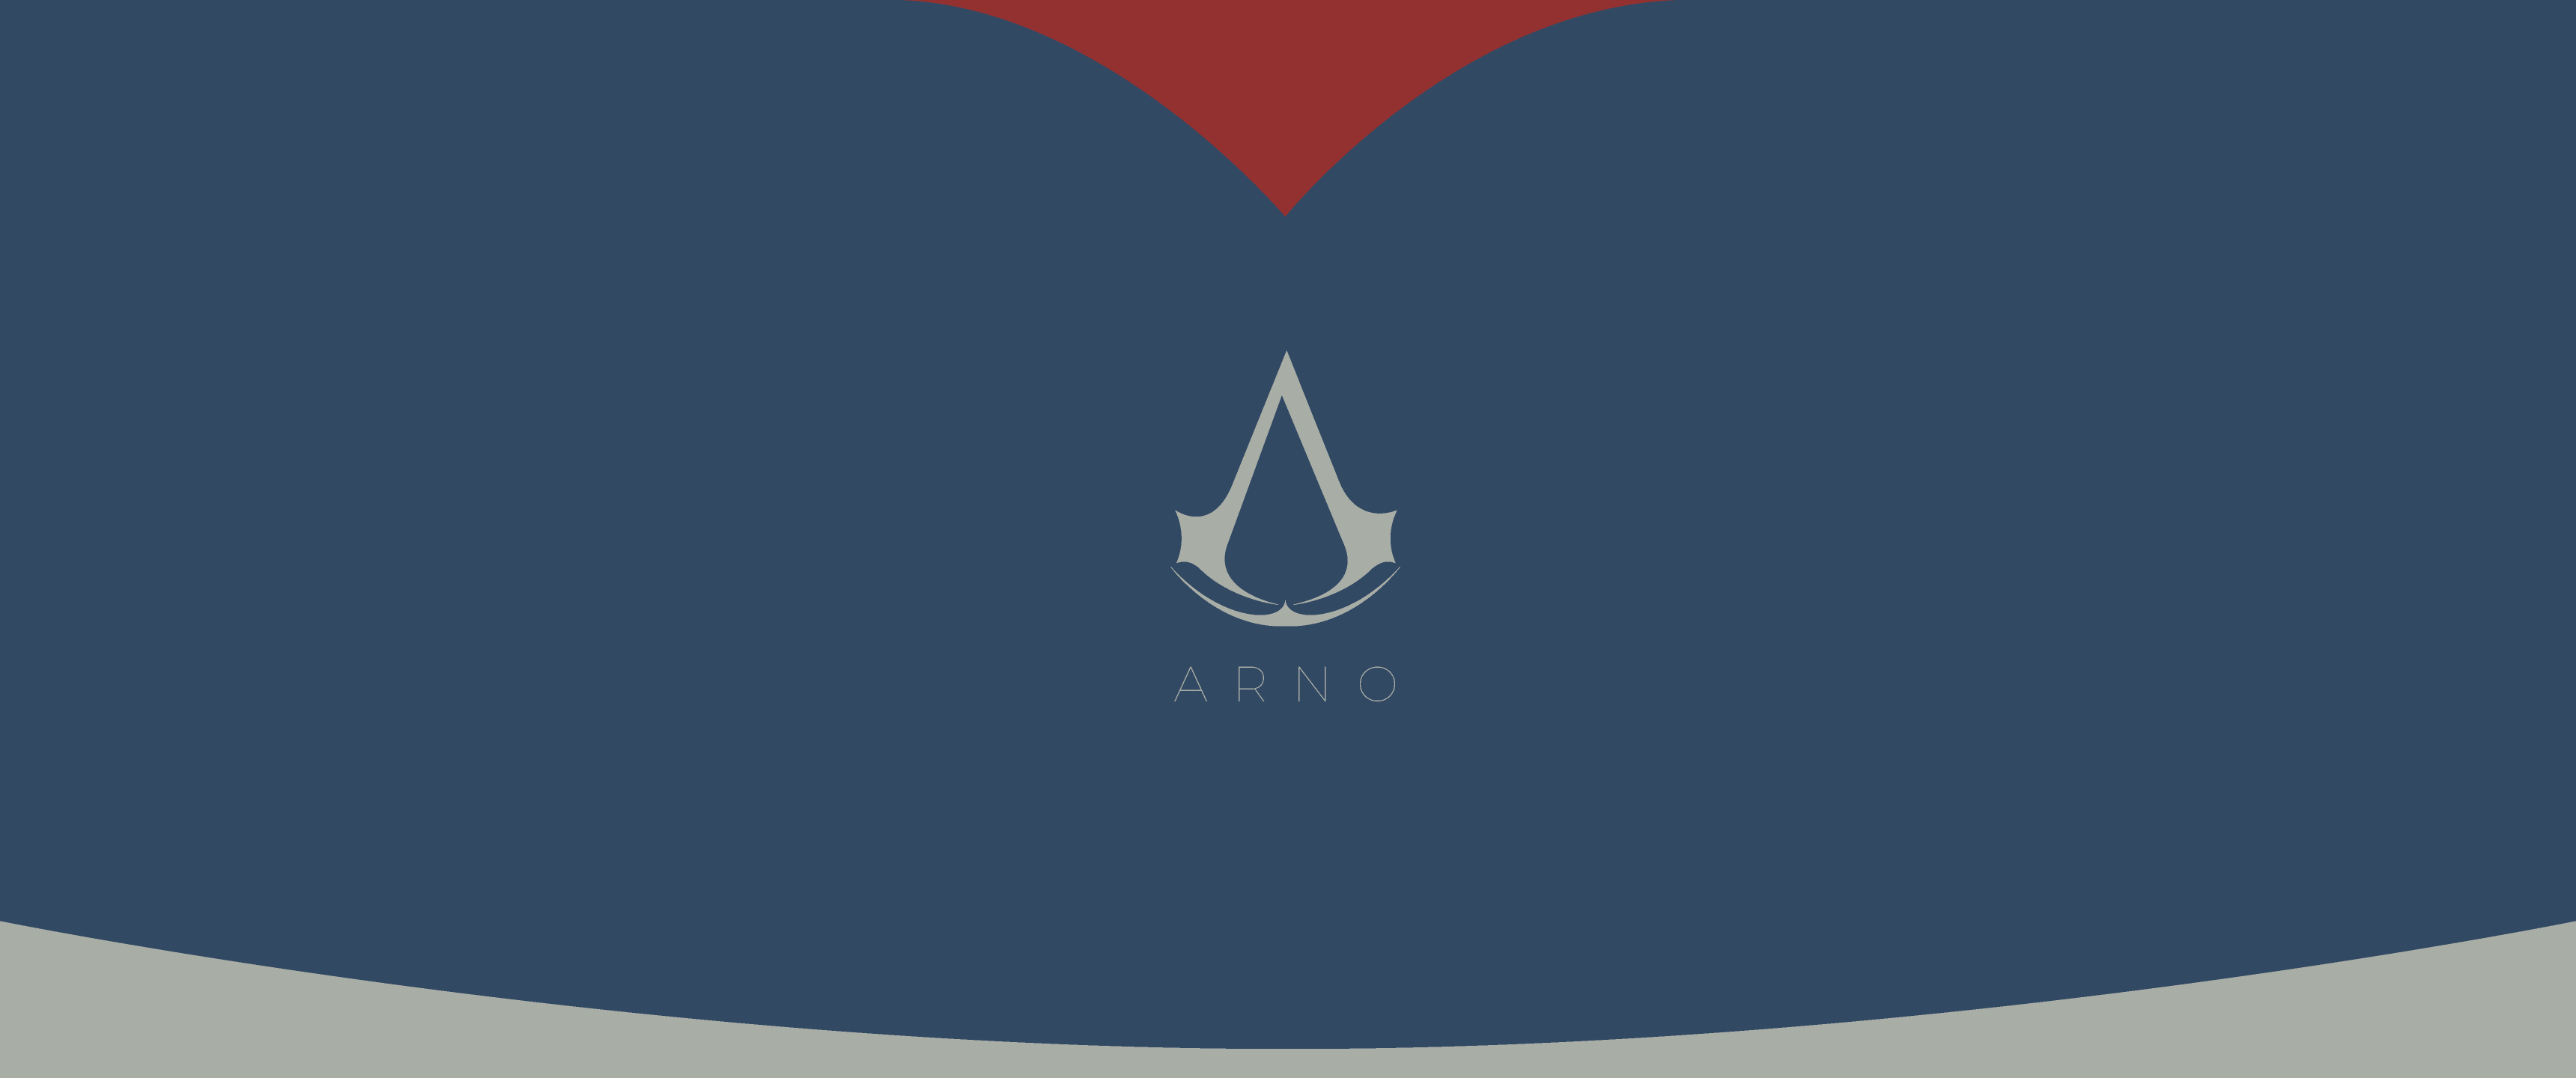 Arno Dorian Assassins Creed Video Game Art 3440x1440